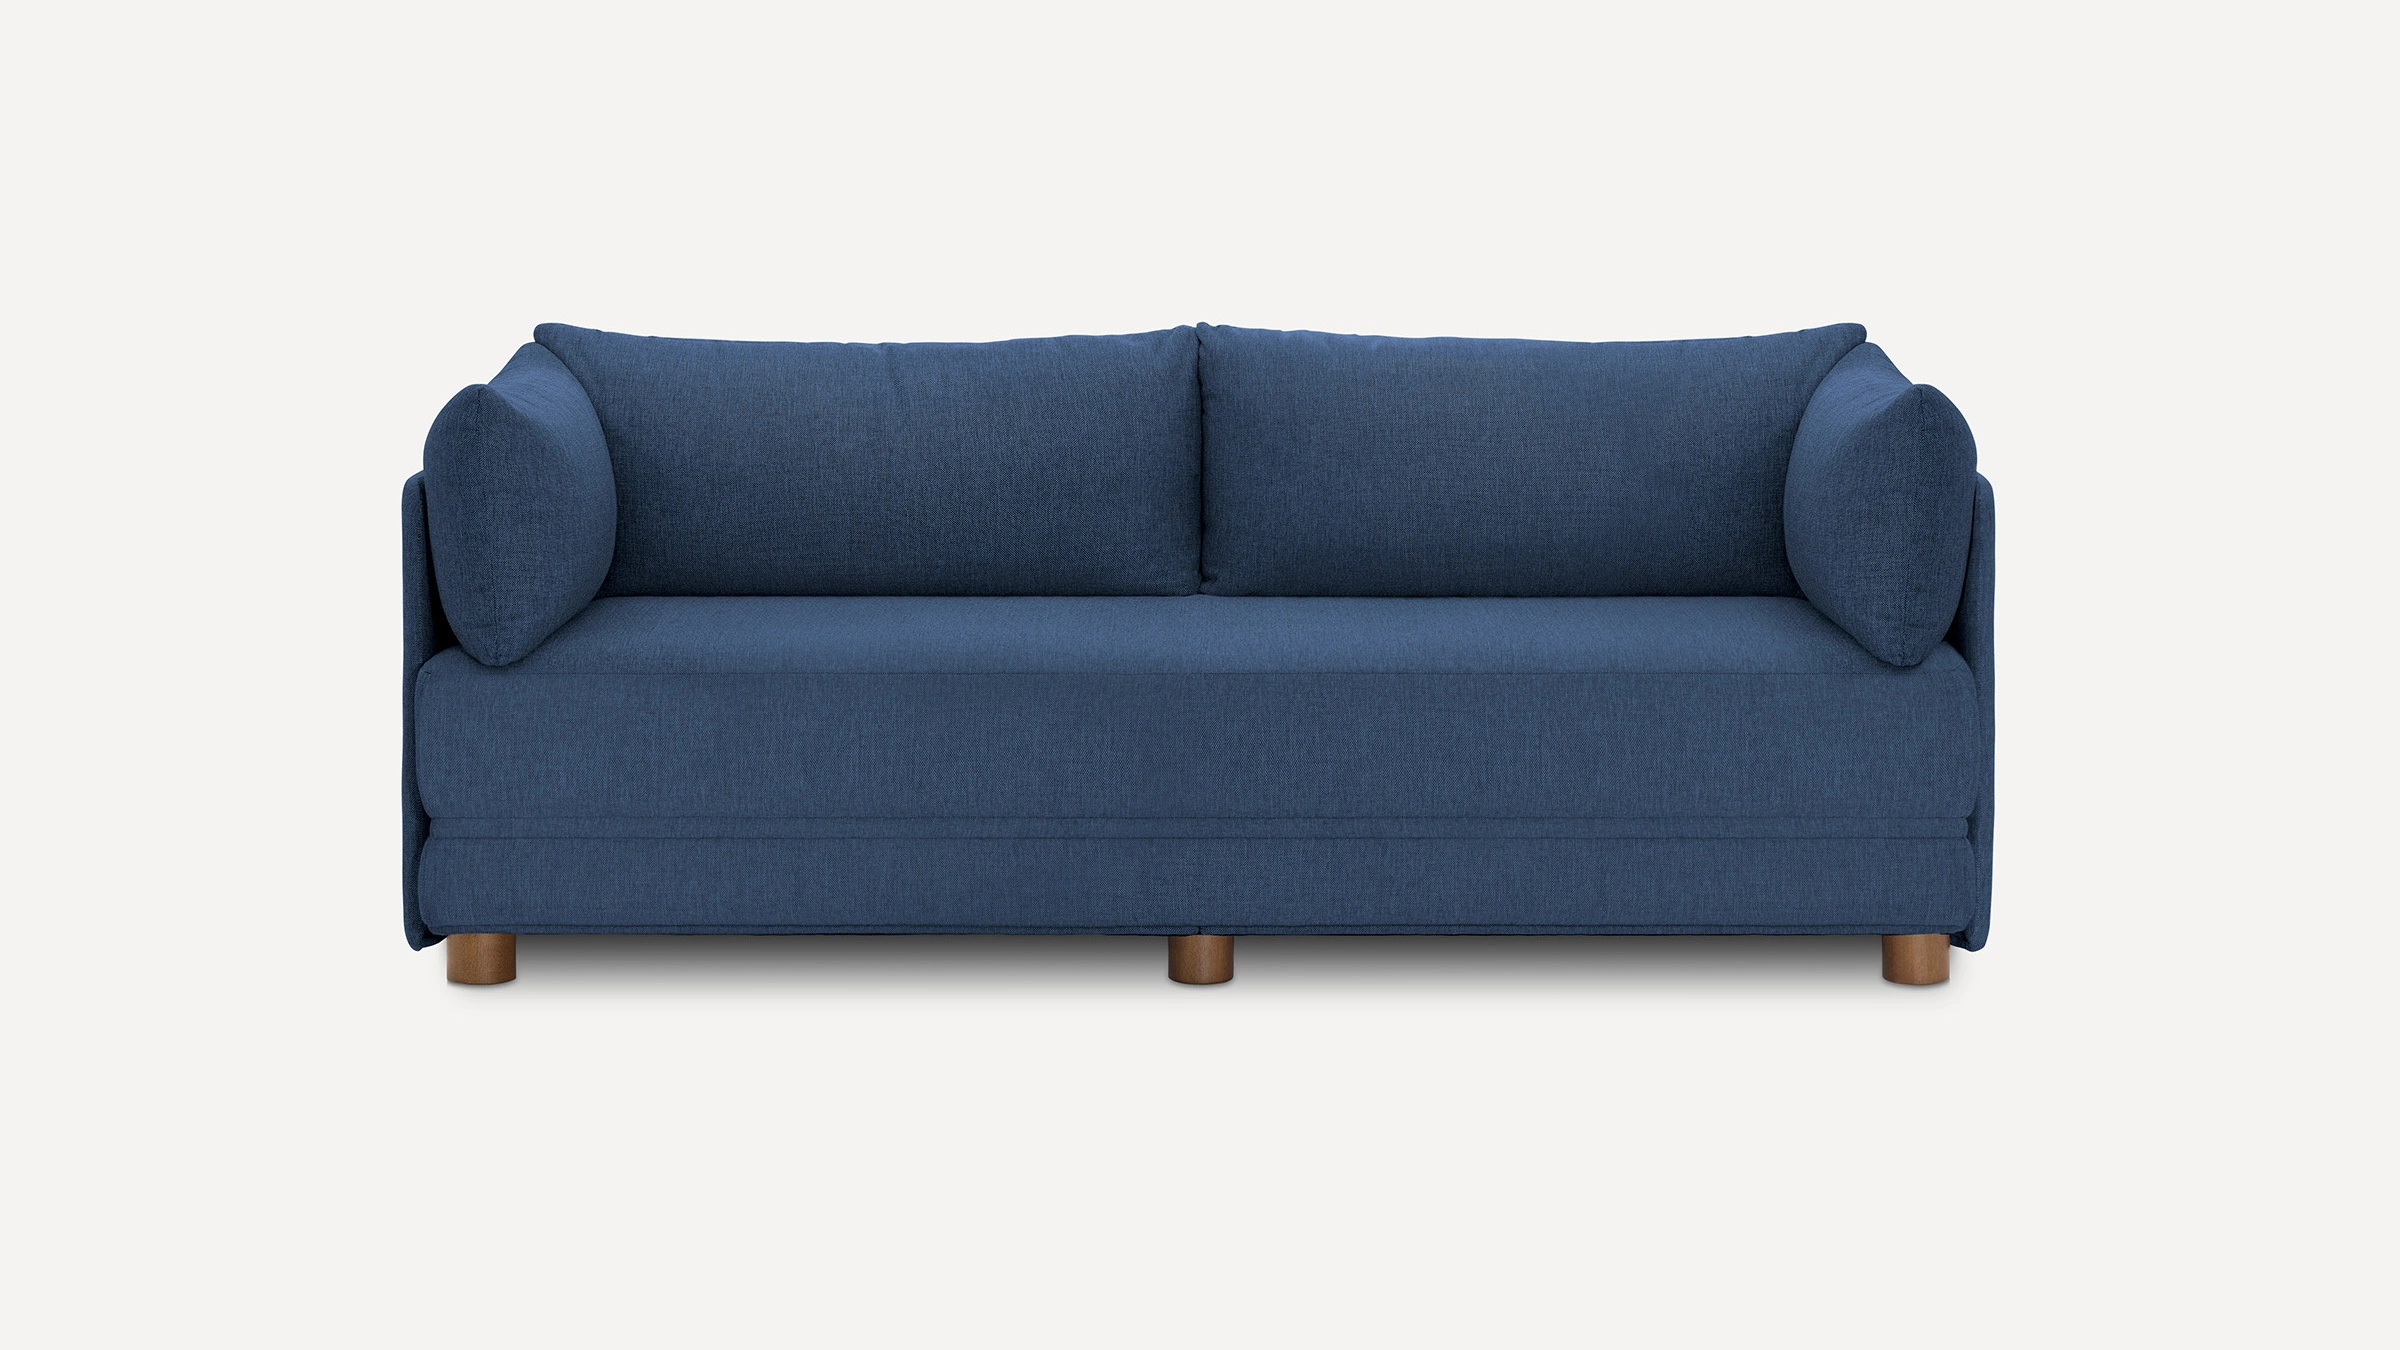 Shift Sleeper Sofa In Navy Blue Walnut Legs